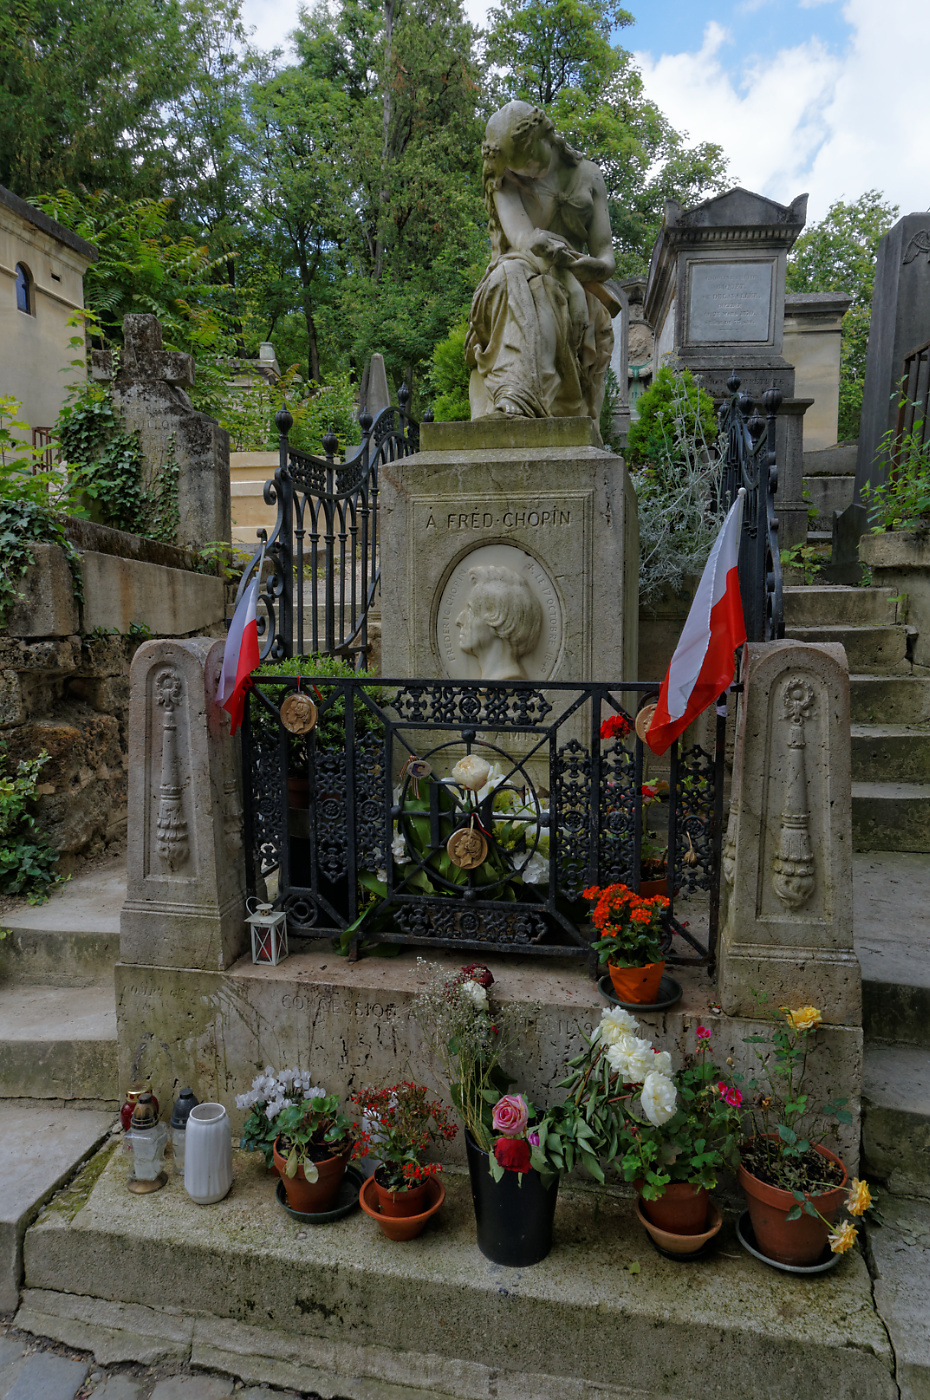 Pere Lachaise temető - Chopin sírja